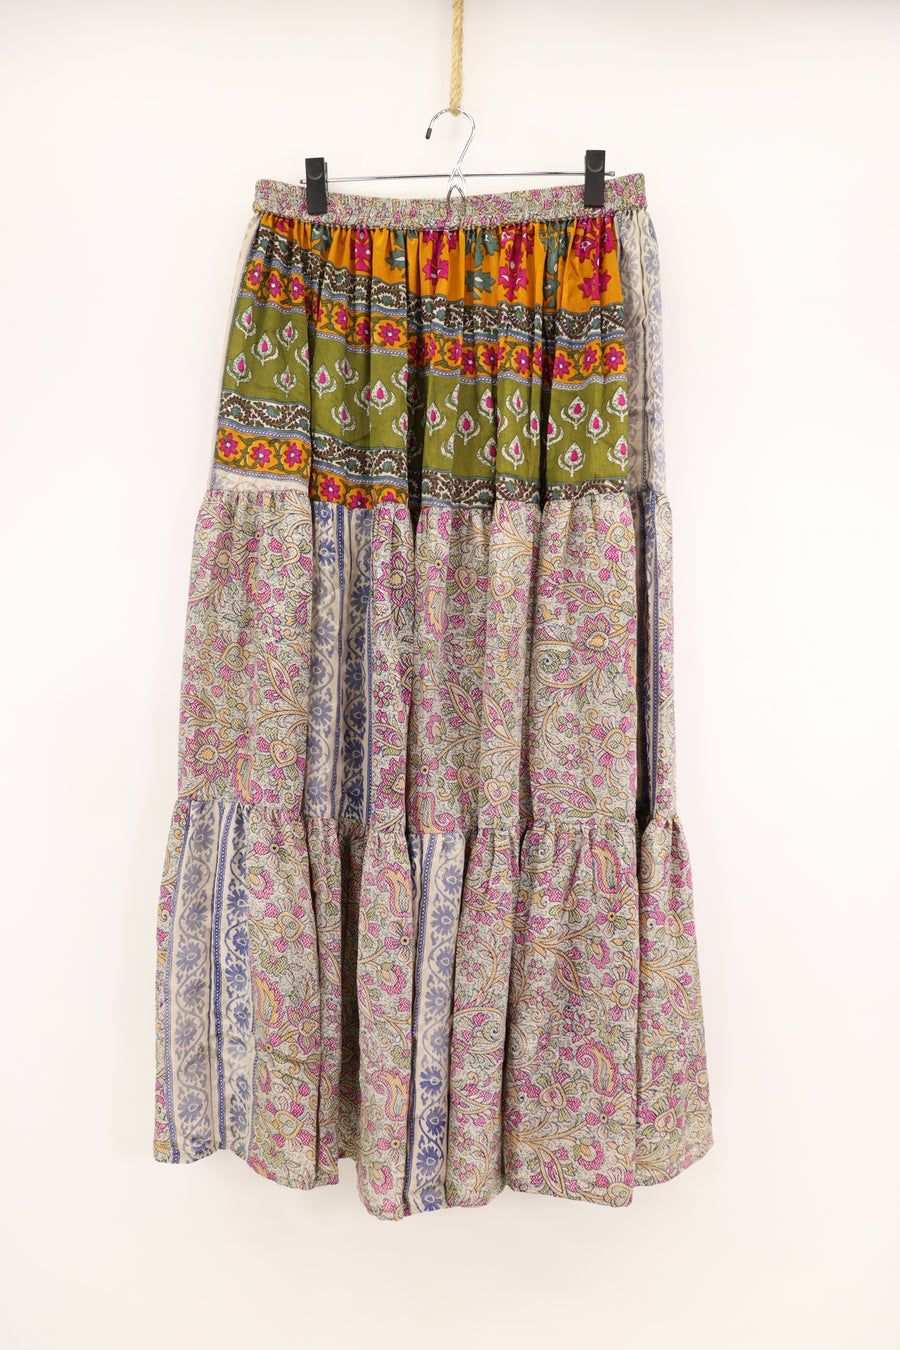 Meadow Skirt L/XL 1594